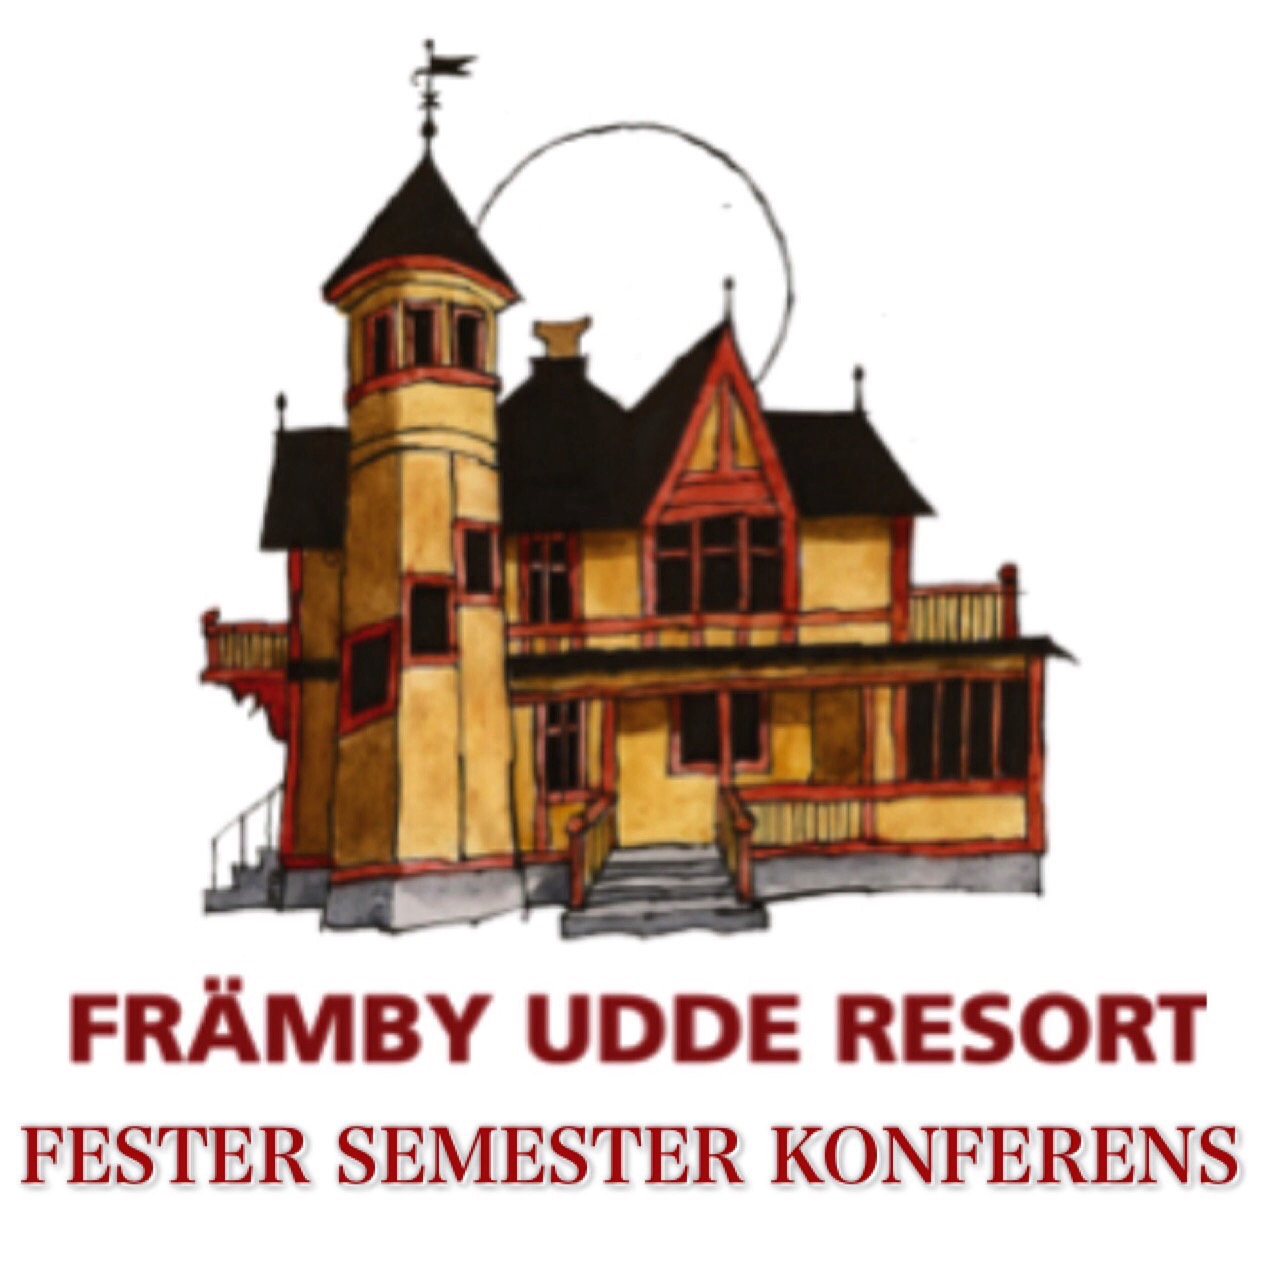 Främby Udde Resort